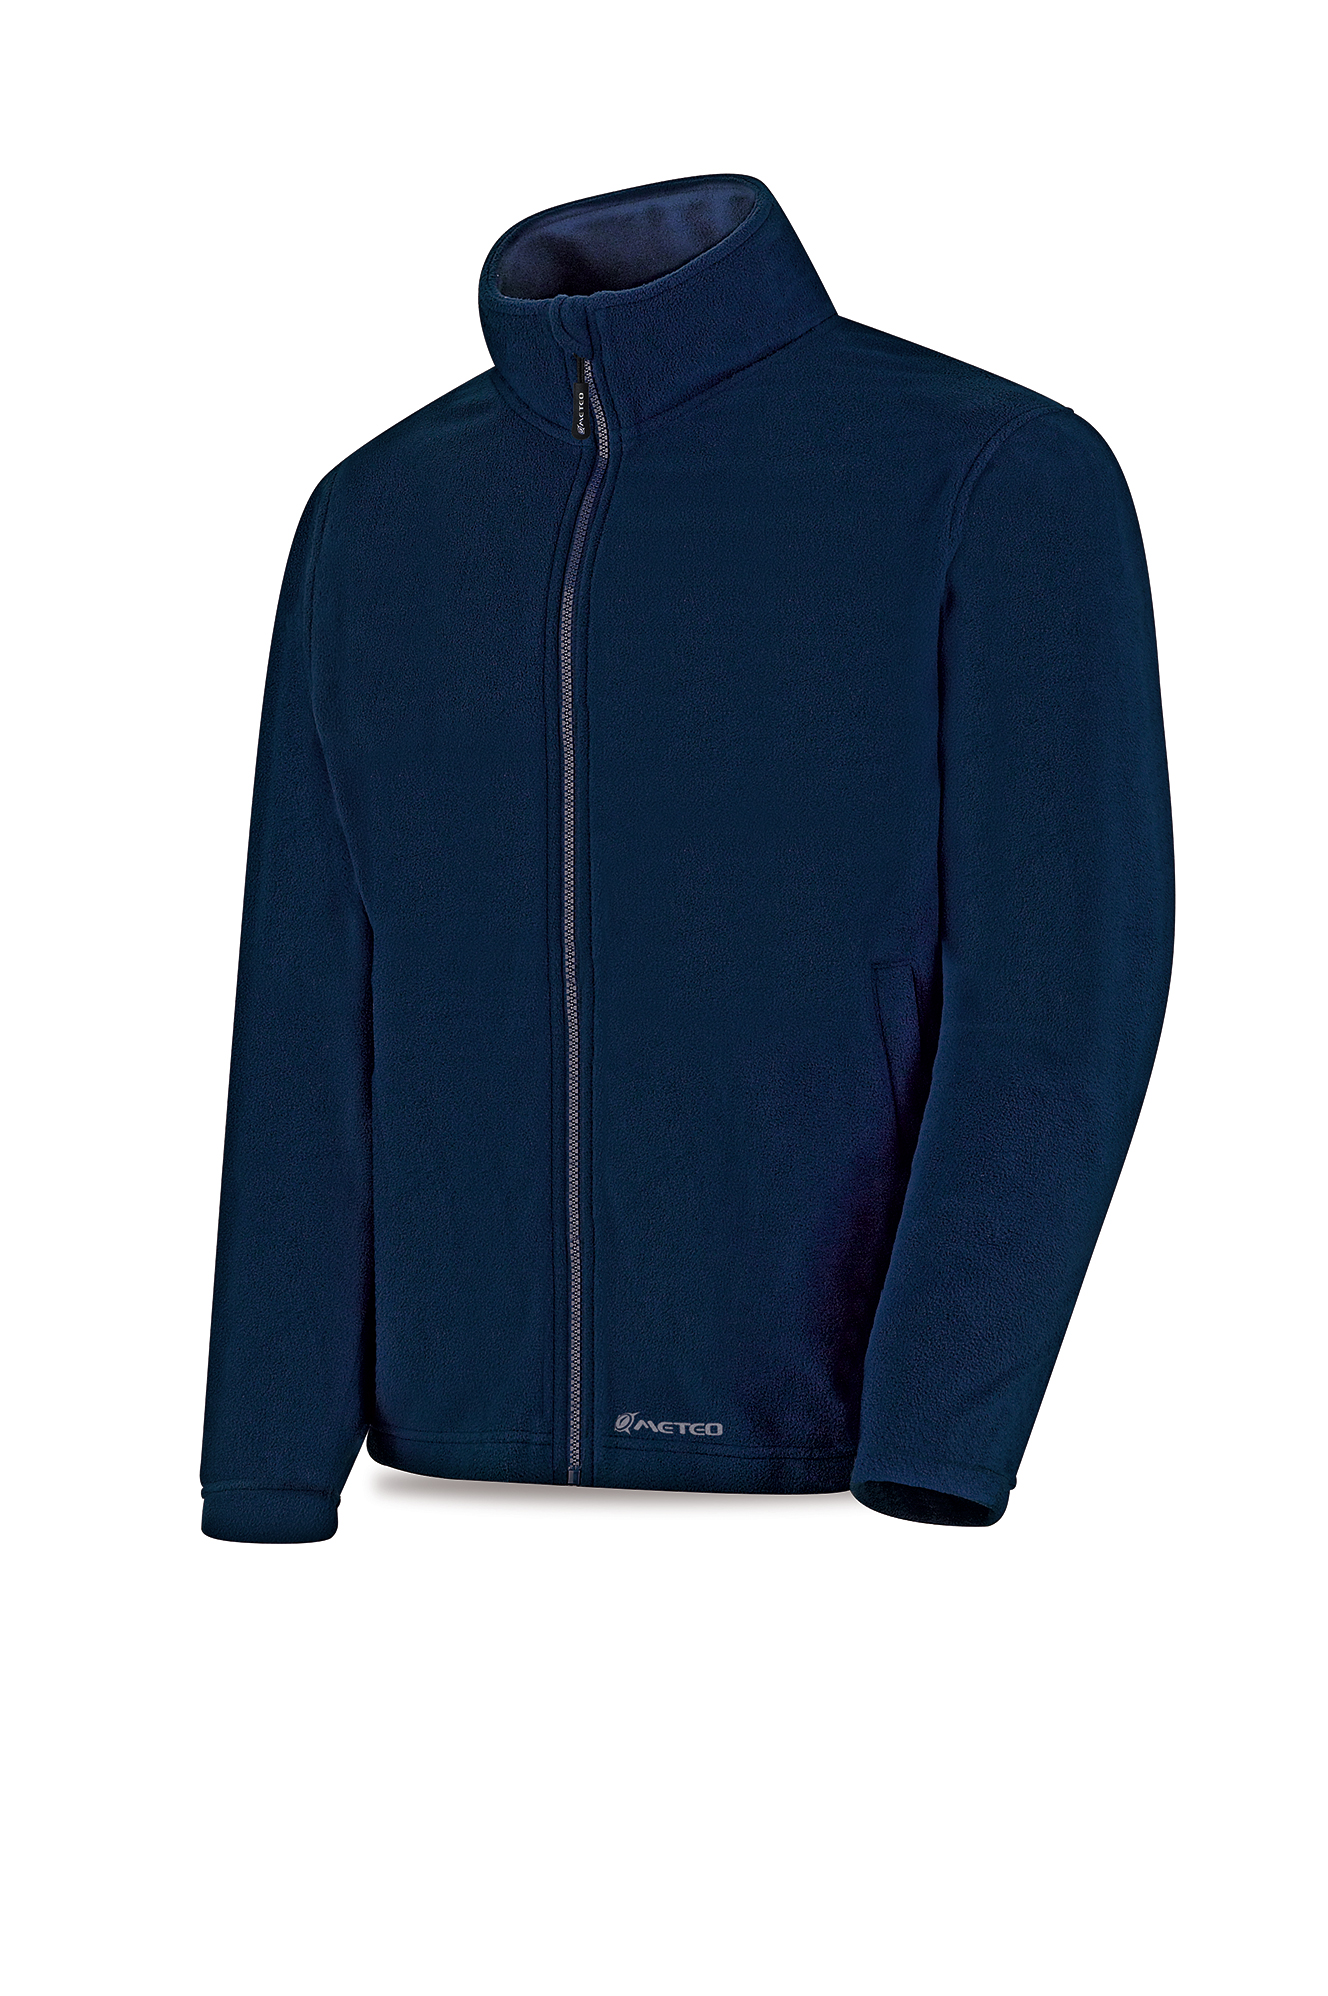 288-CHPA Coats and Rain Gear Solar Jackets QUETZAL model fleece jacket. Navy colour.